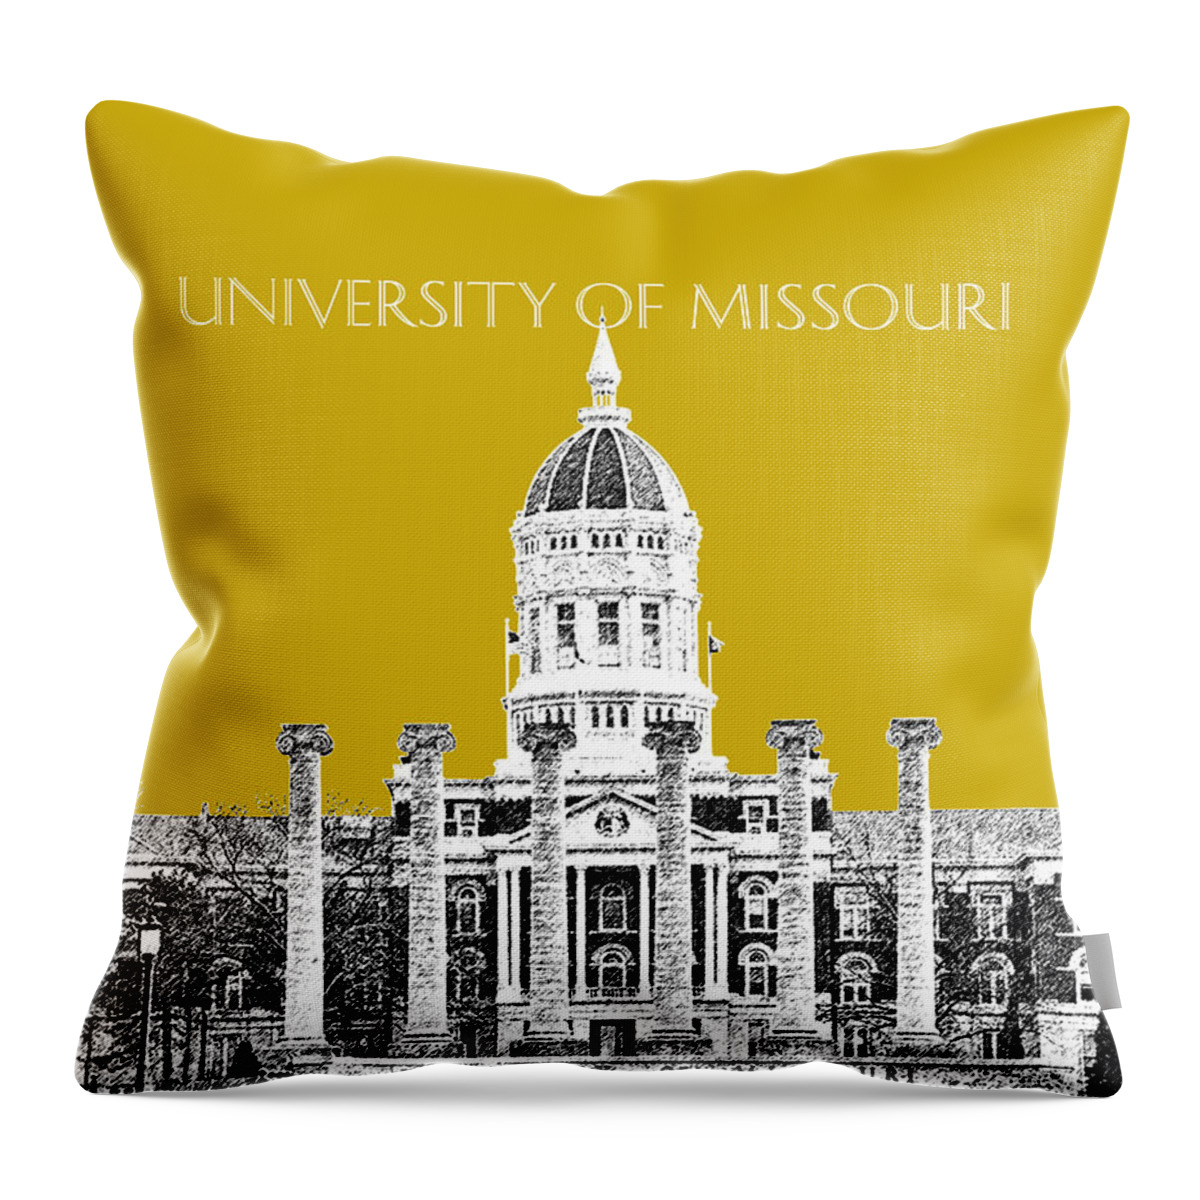 University Throw Pillow featuring the digital art University of Missouri - Gold by DB Artist